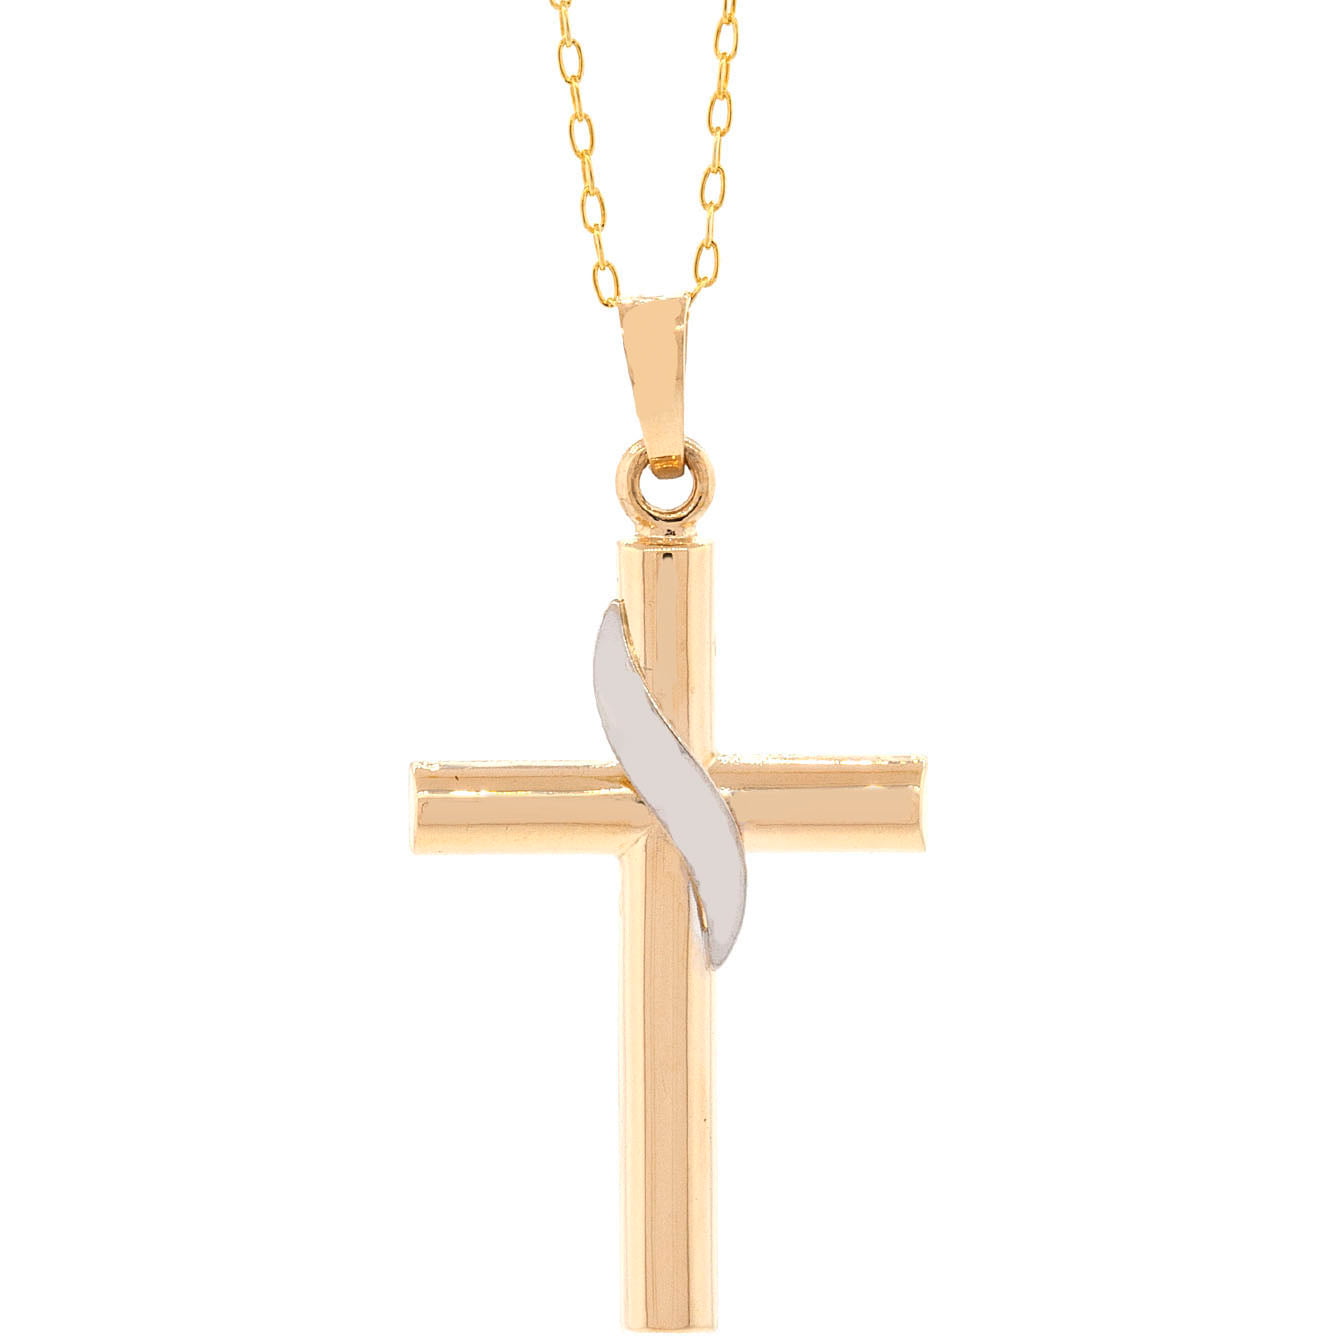 PORI JEWELERS - Pori Jewelers 14K Solid Gold Cross Pendant With Chain